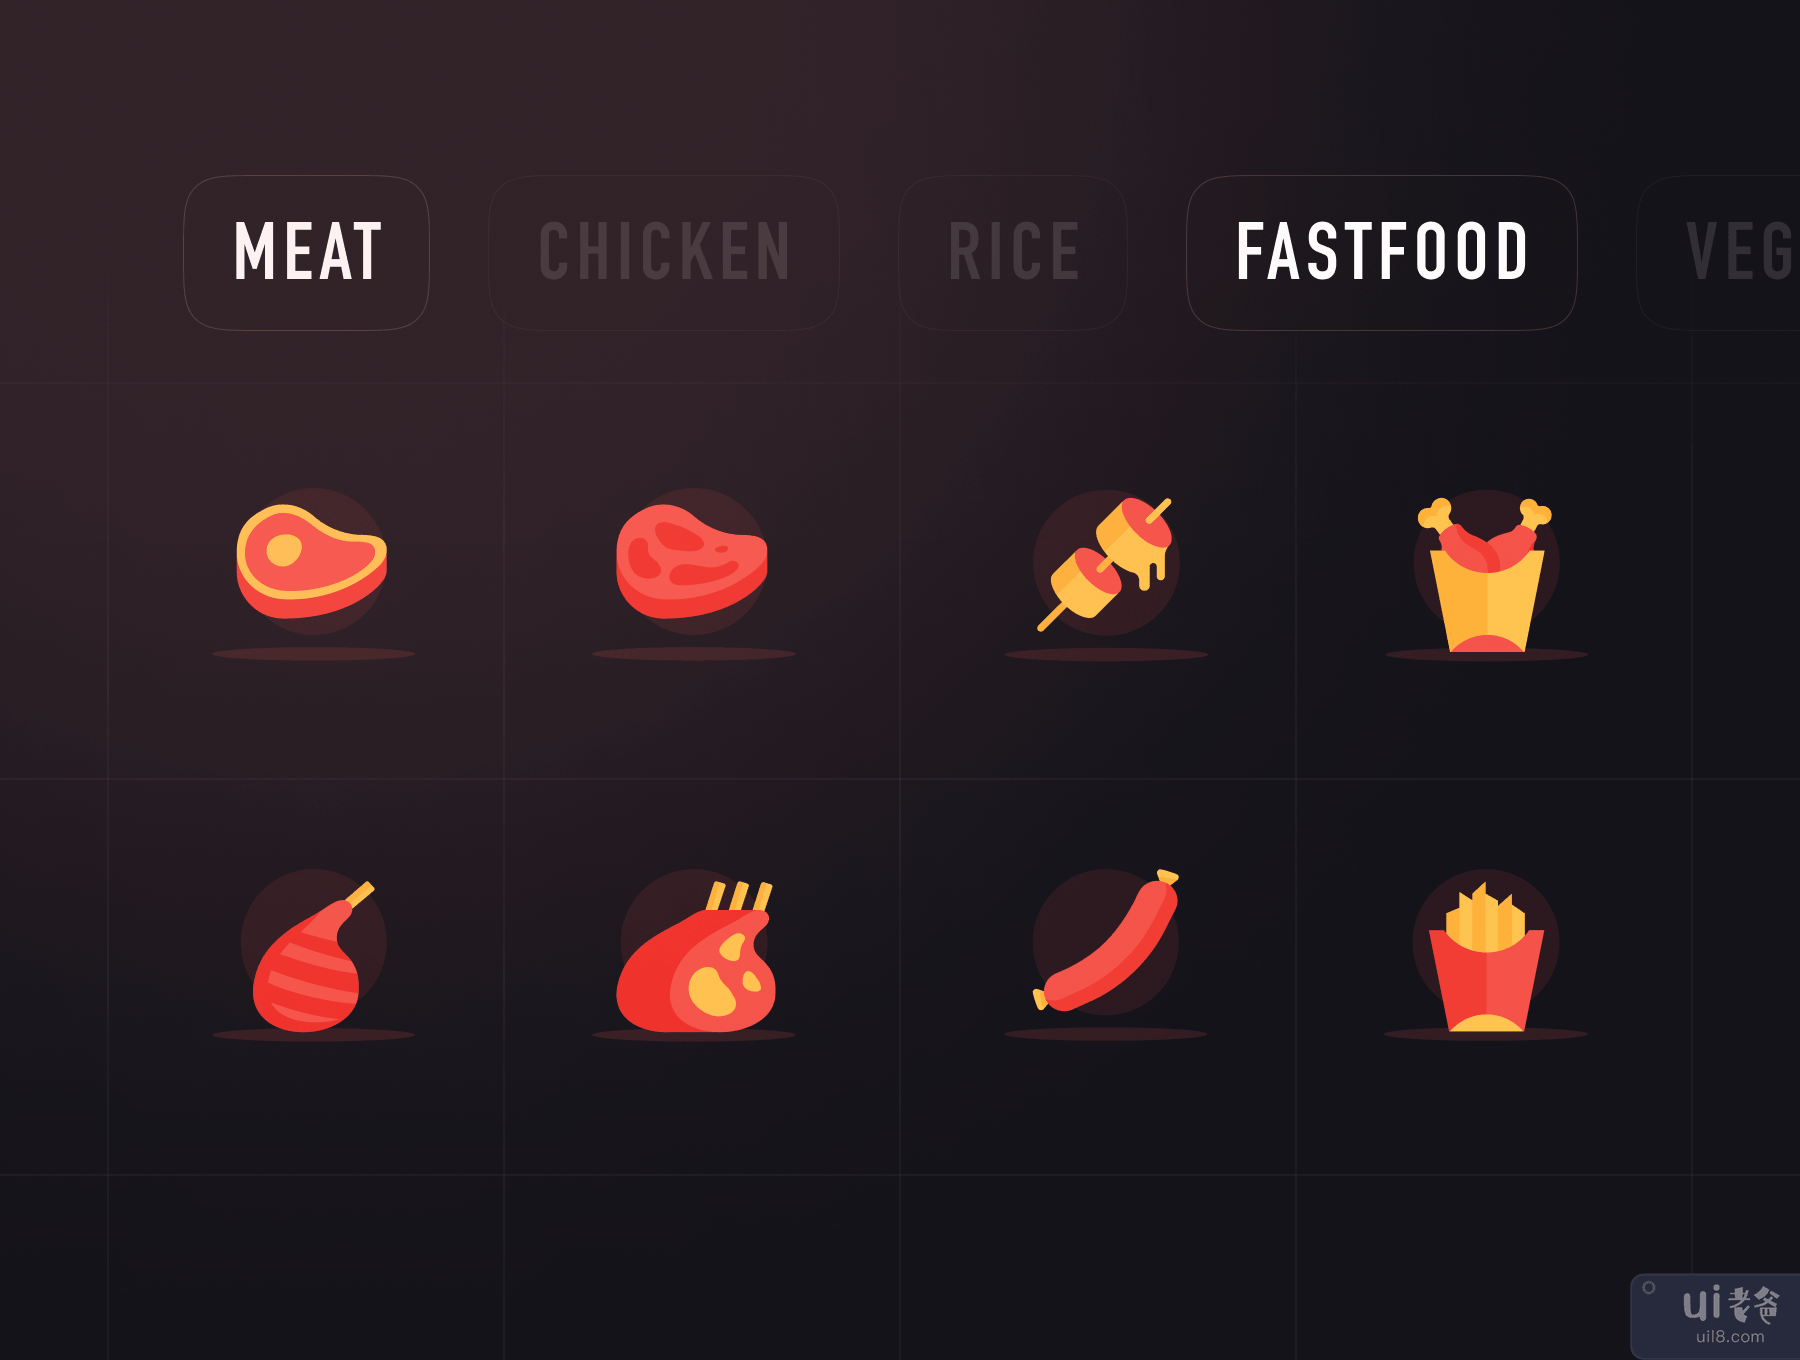 Feastful - 高级食品颜色图标包 (Feastful - Food color icon advanced pack)插图3